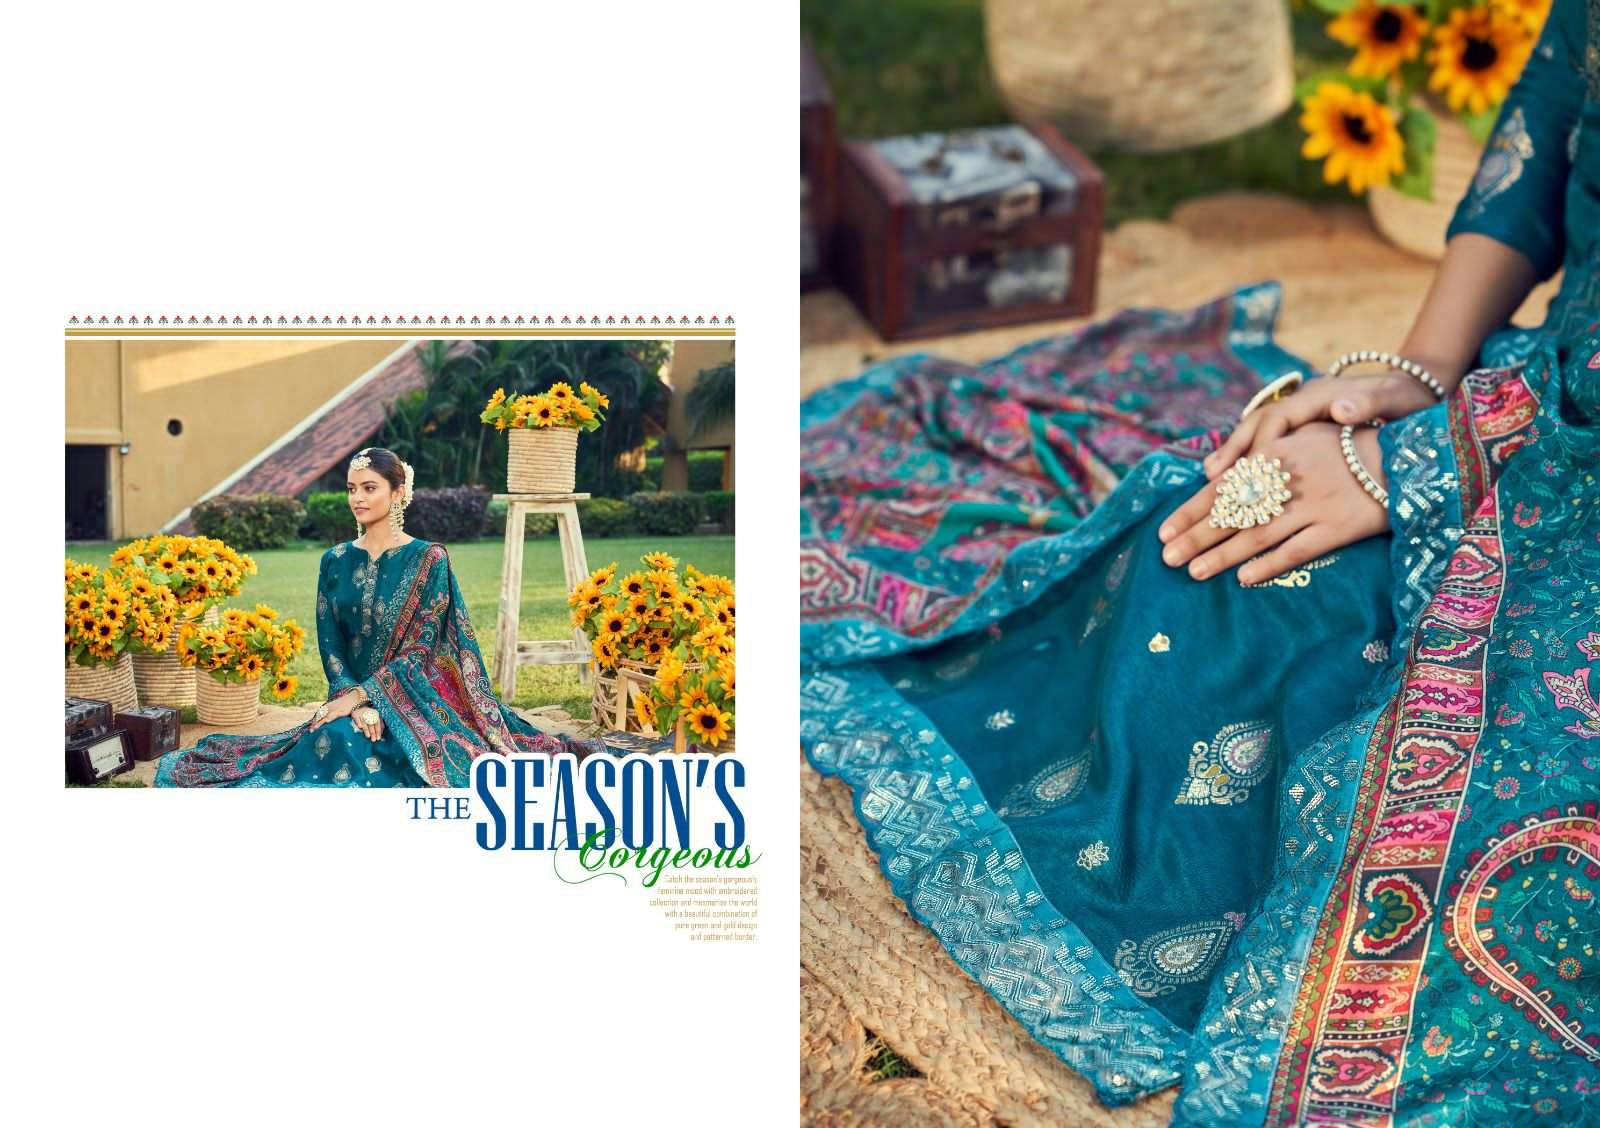 nishant fashion inaaya 41001-41006 series latest designer salwar kameez wholesaler surat gujarat